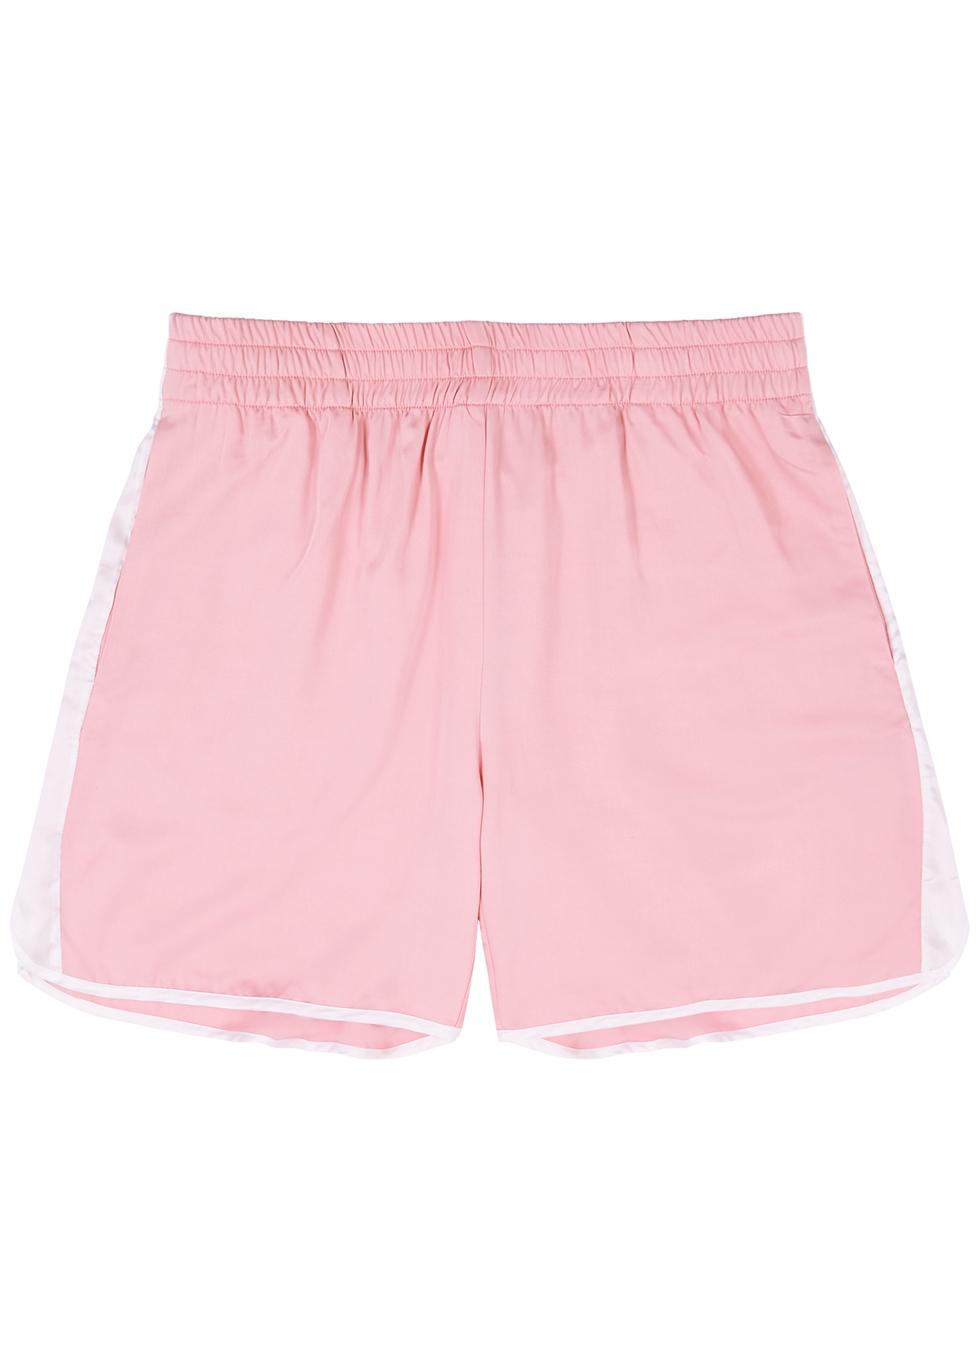 Blue Sky Inn Waiter pink striped satin shorts - Harvey Nichols